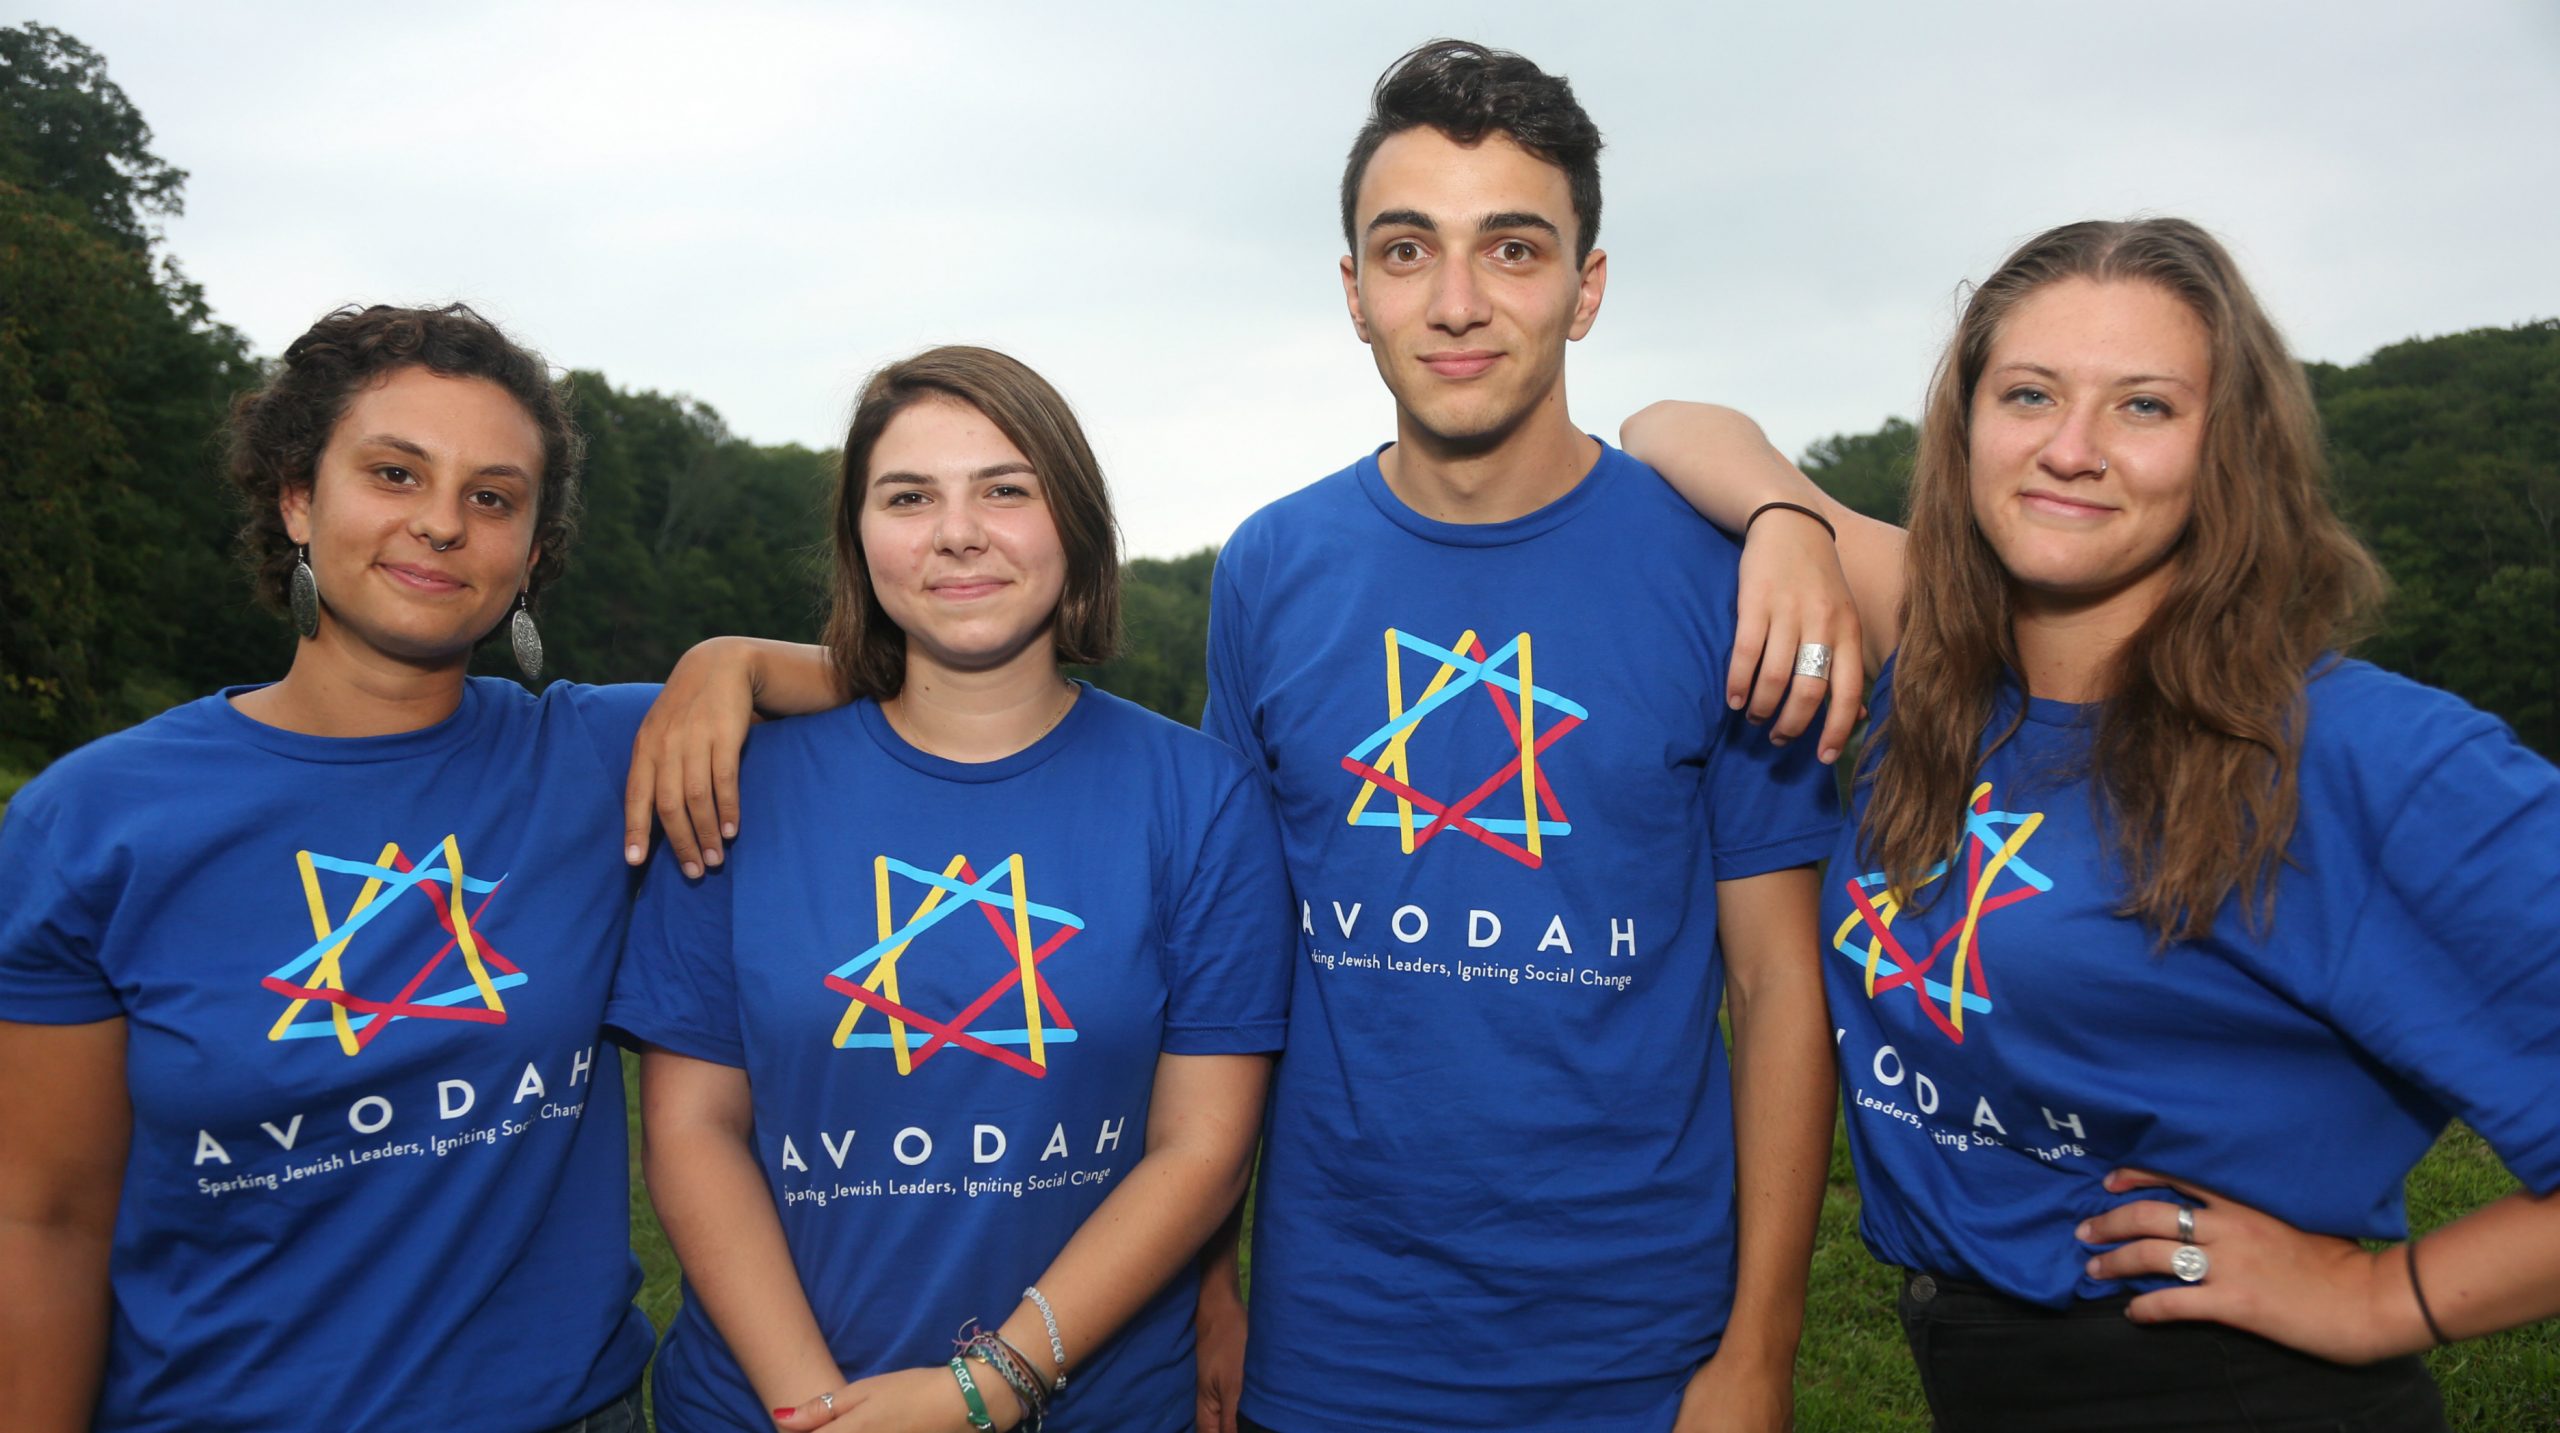 AVODAH – A Model for Jewish Service Education